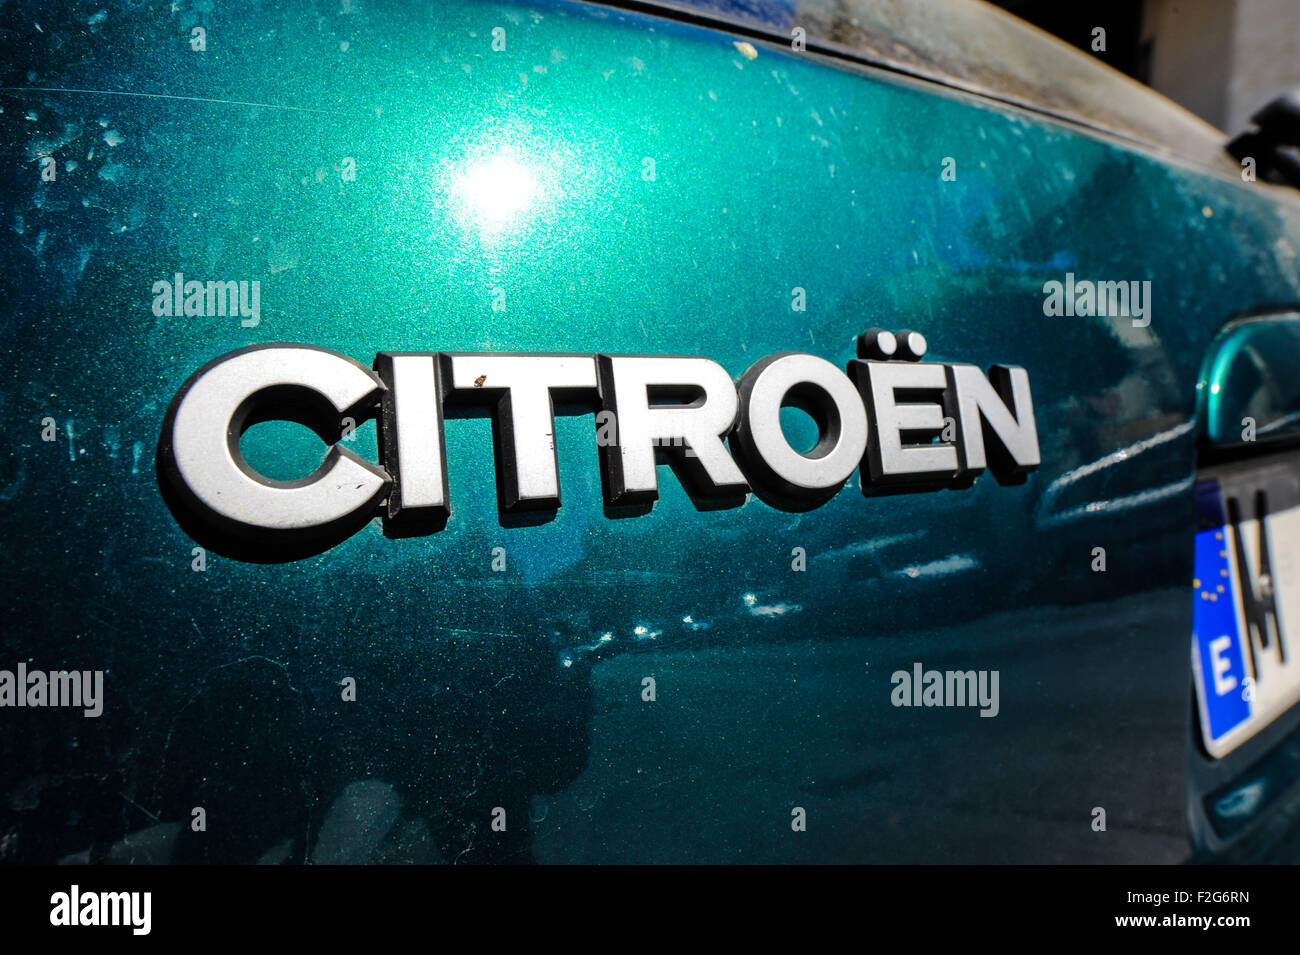 Automobile Citroën - automóvil  Citroën Stock Photo